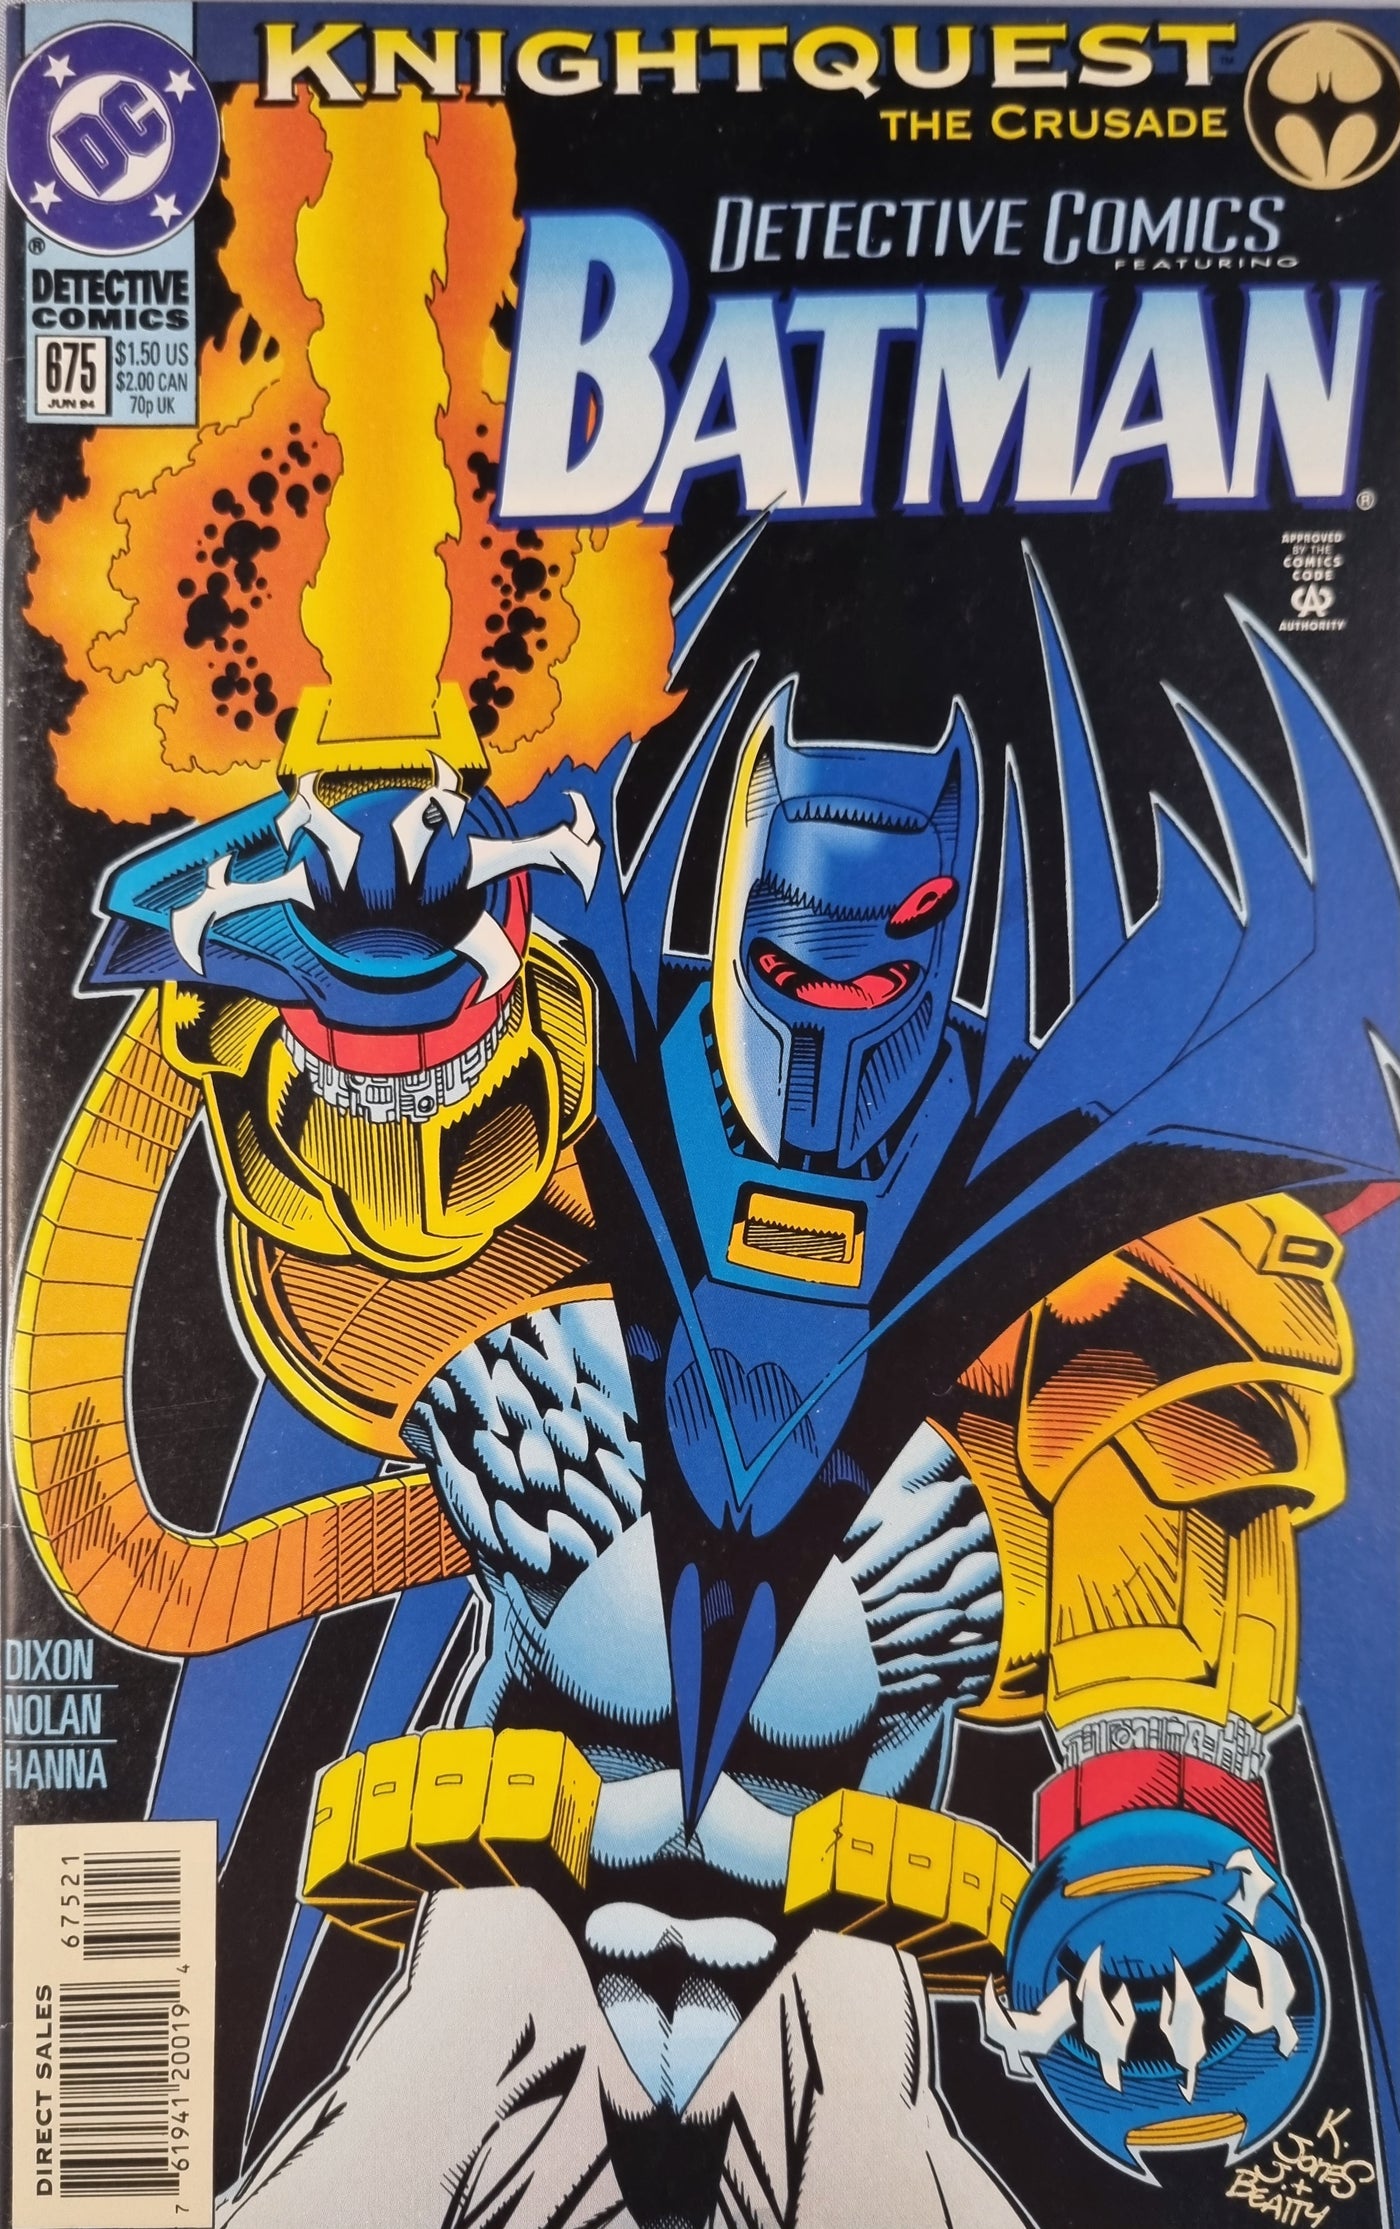 Detective Comics (Volume 1) #675 (Variant Cover)